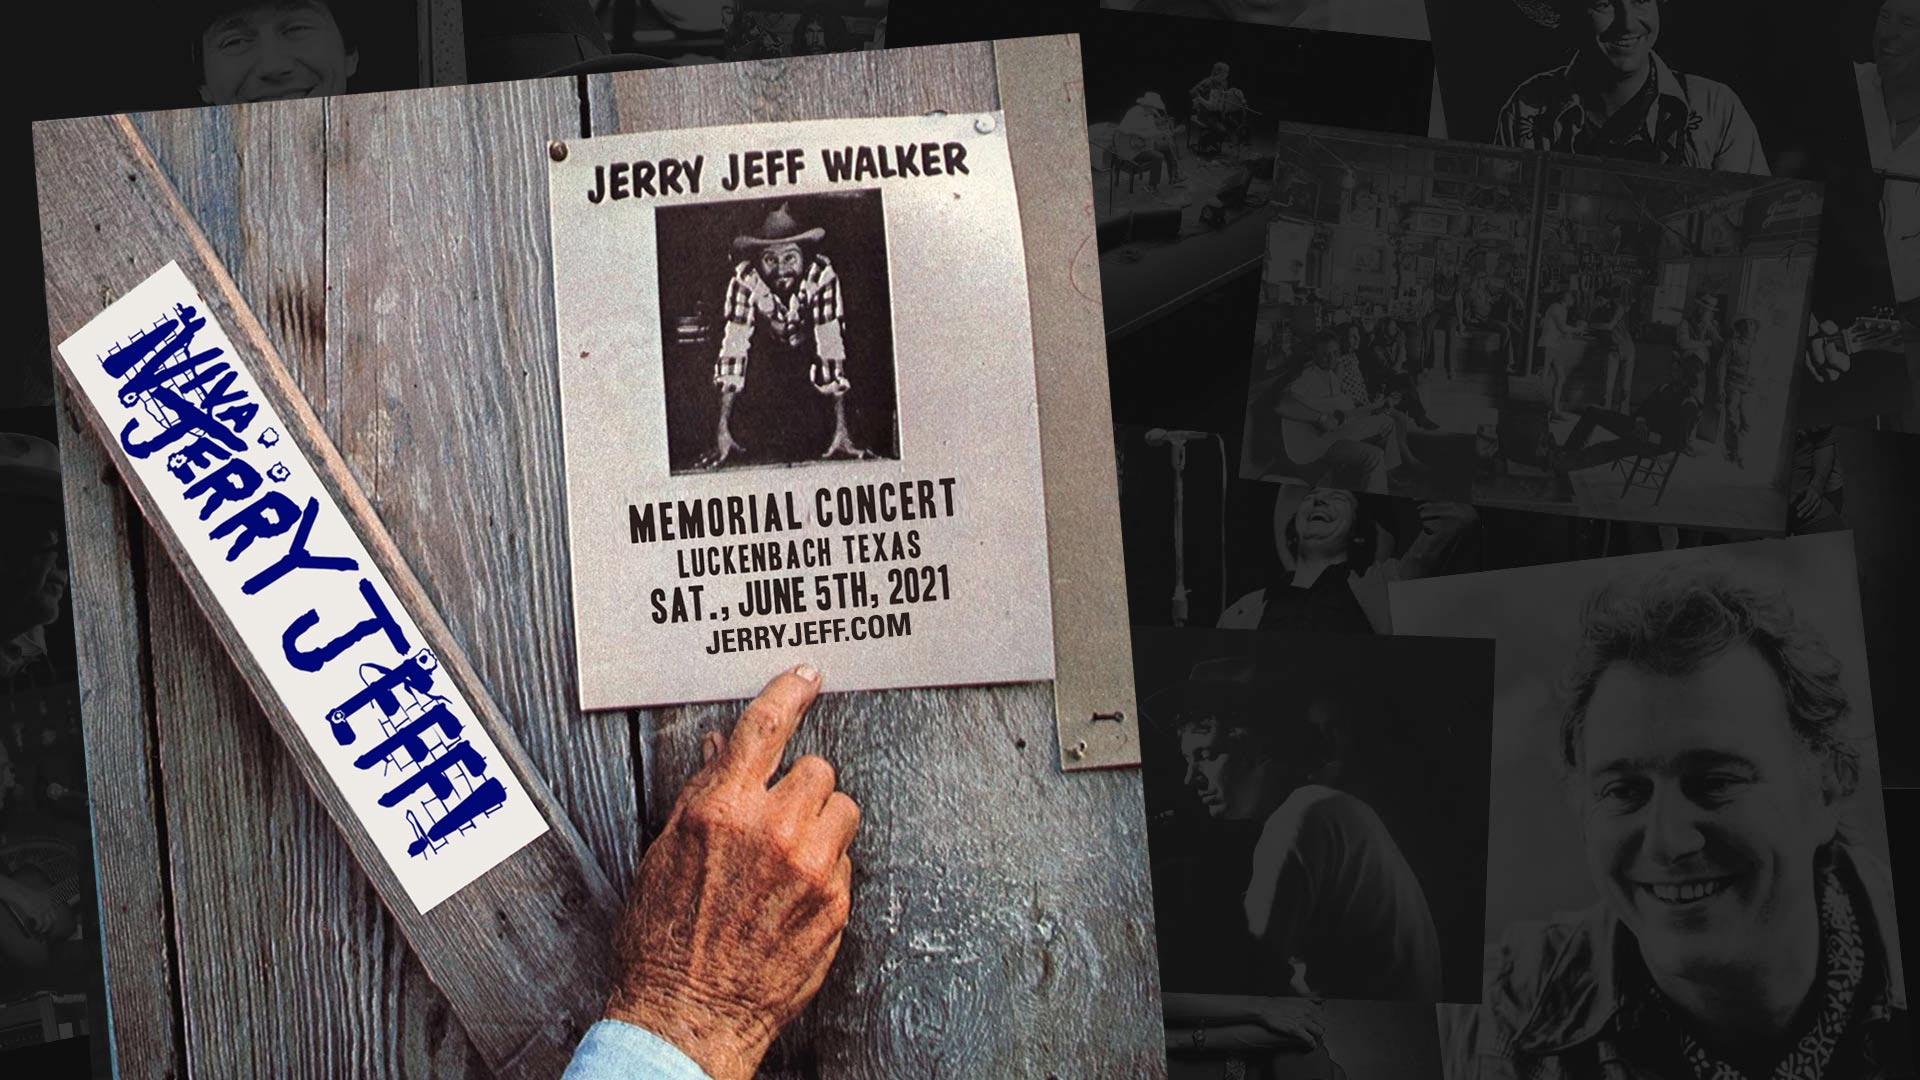 Escuche un programa tributo especial a Jerry Jeff Walker en Radio Margaritaville y Outlaw Country